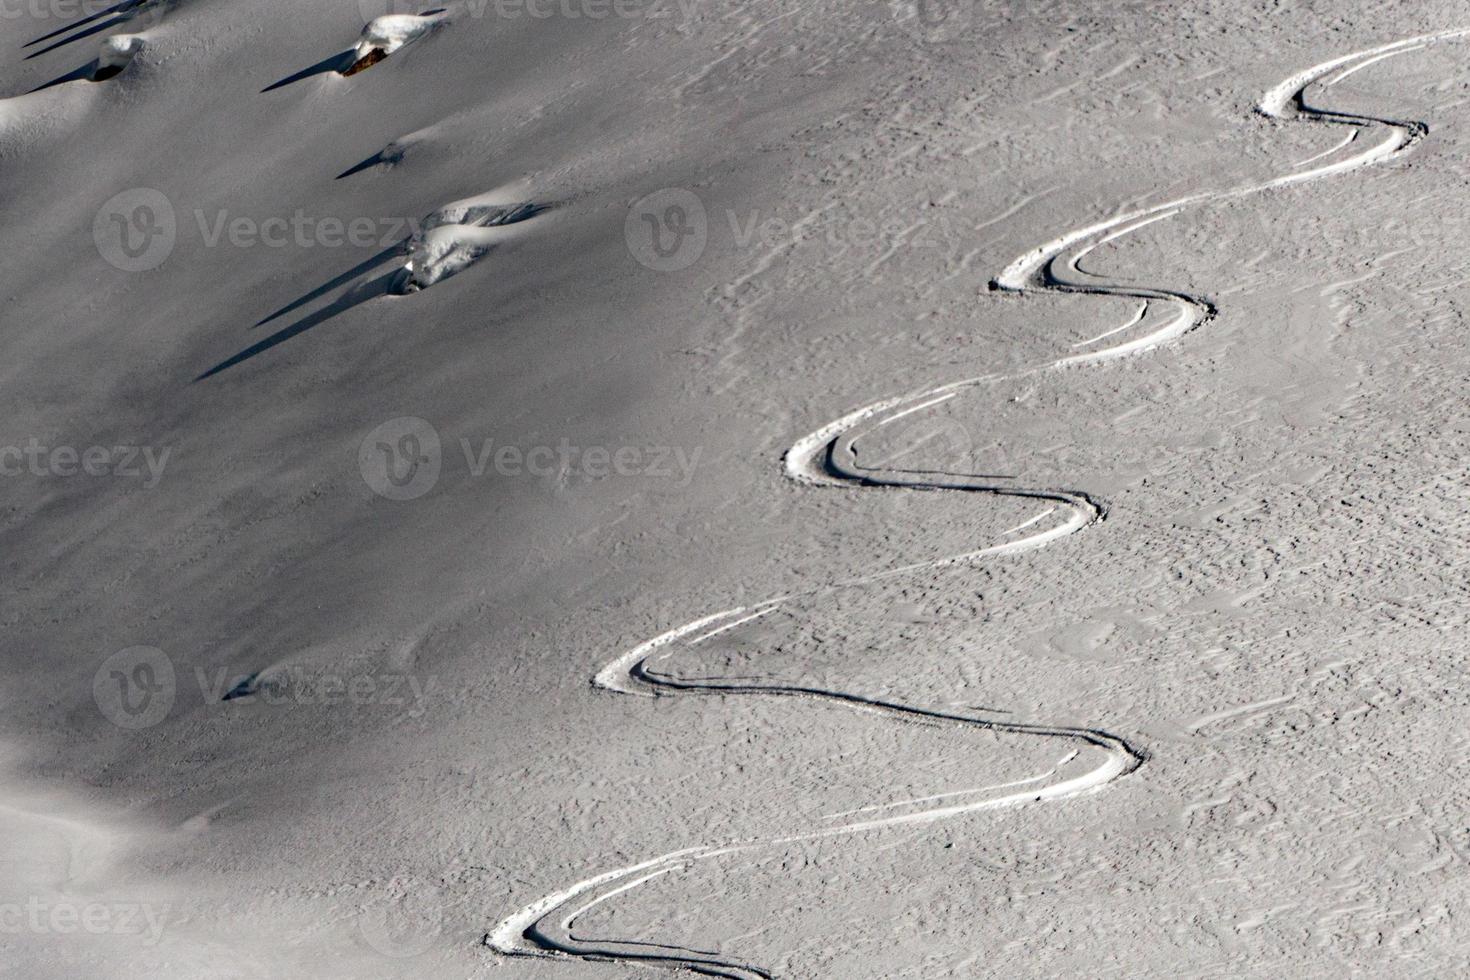 backcountry skiën trails sneeuw detail foto